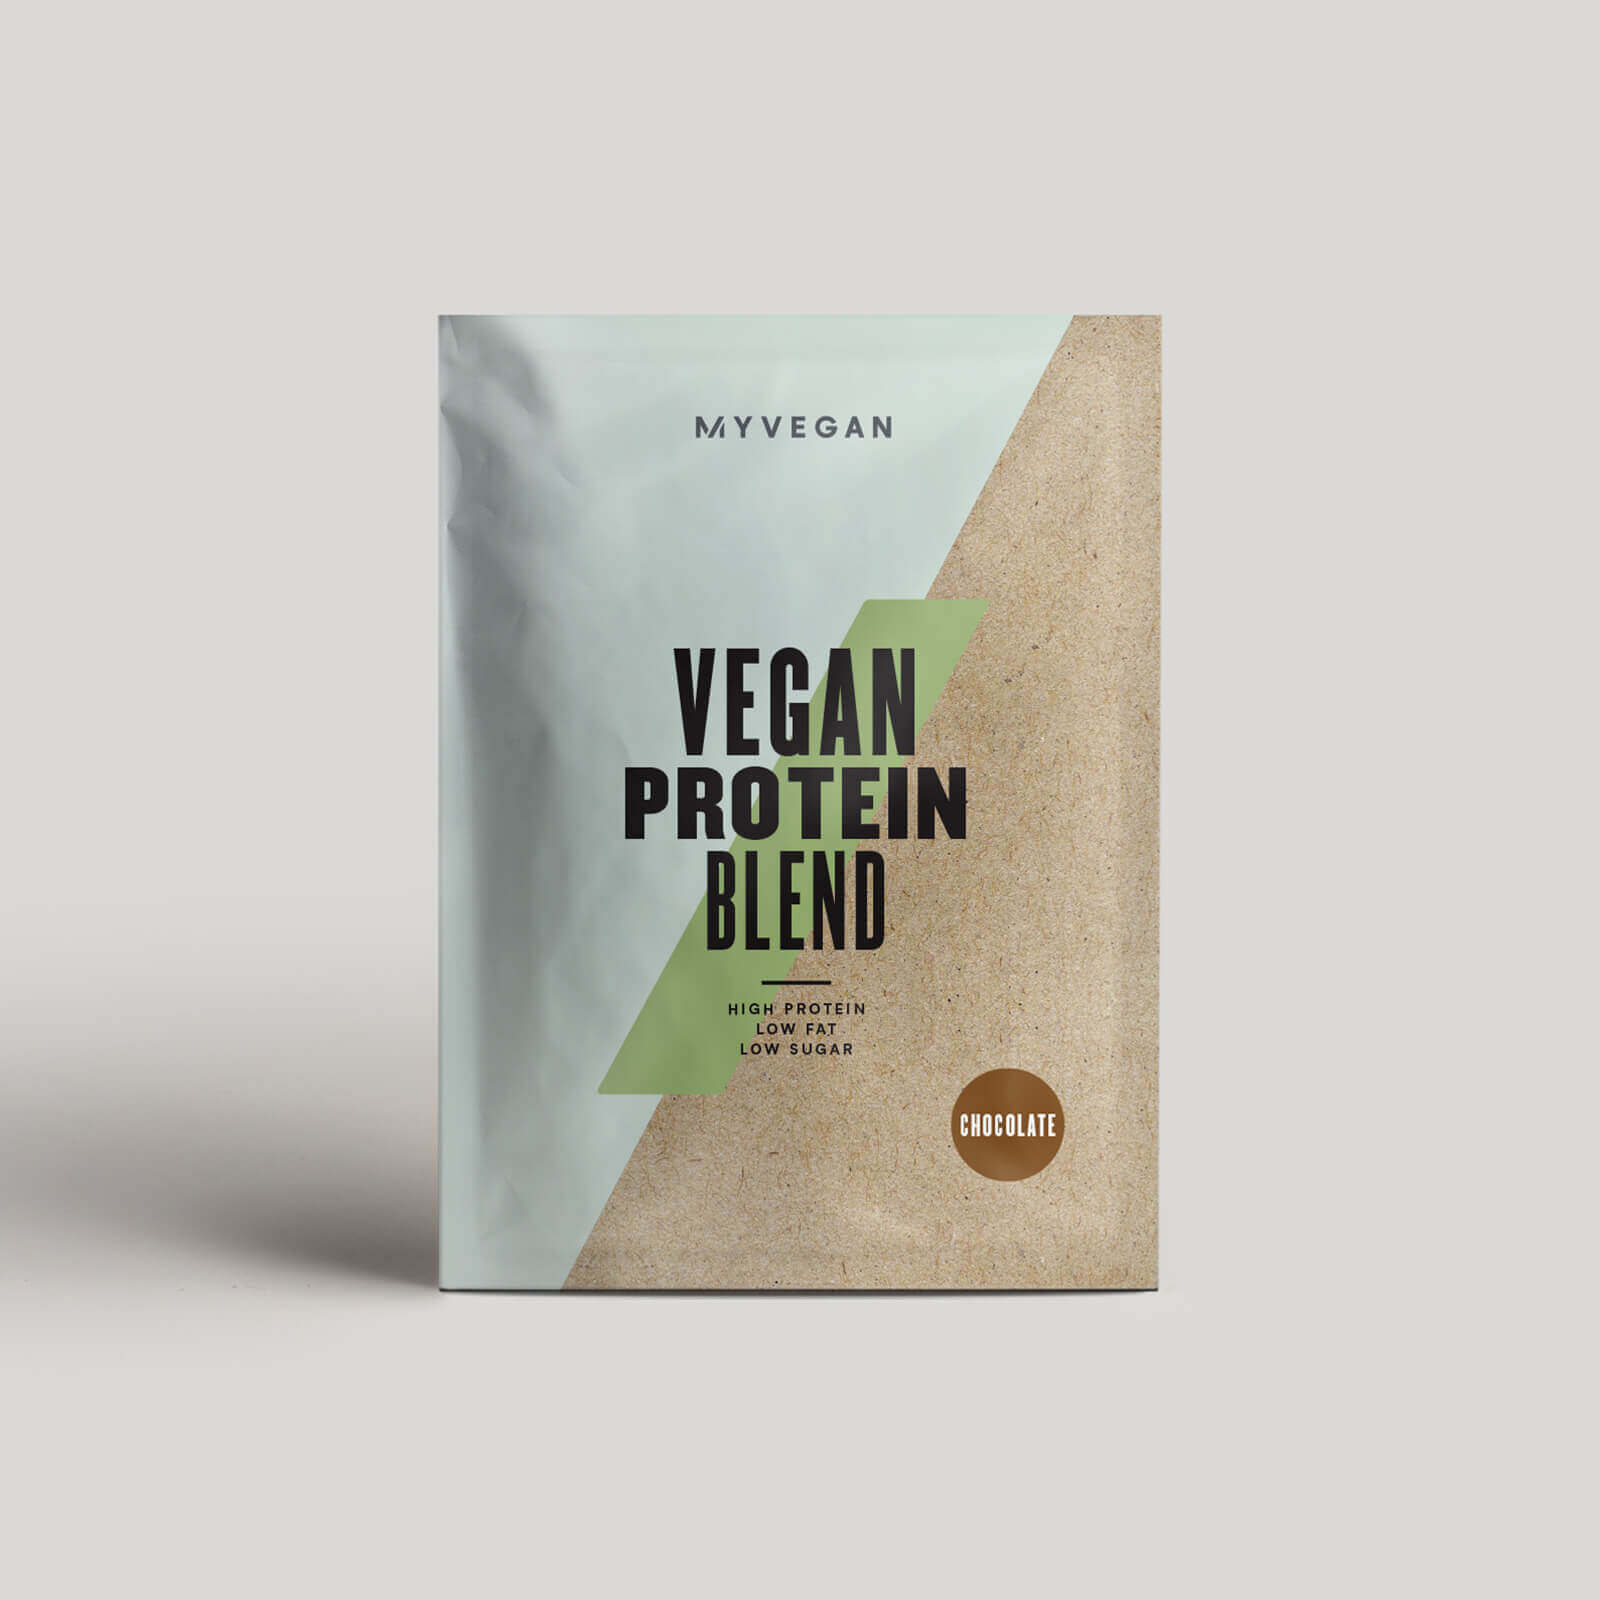 Myvegan Vegan Protein Blend (Sample) - 30g - Cioccolato